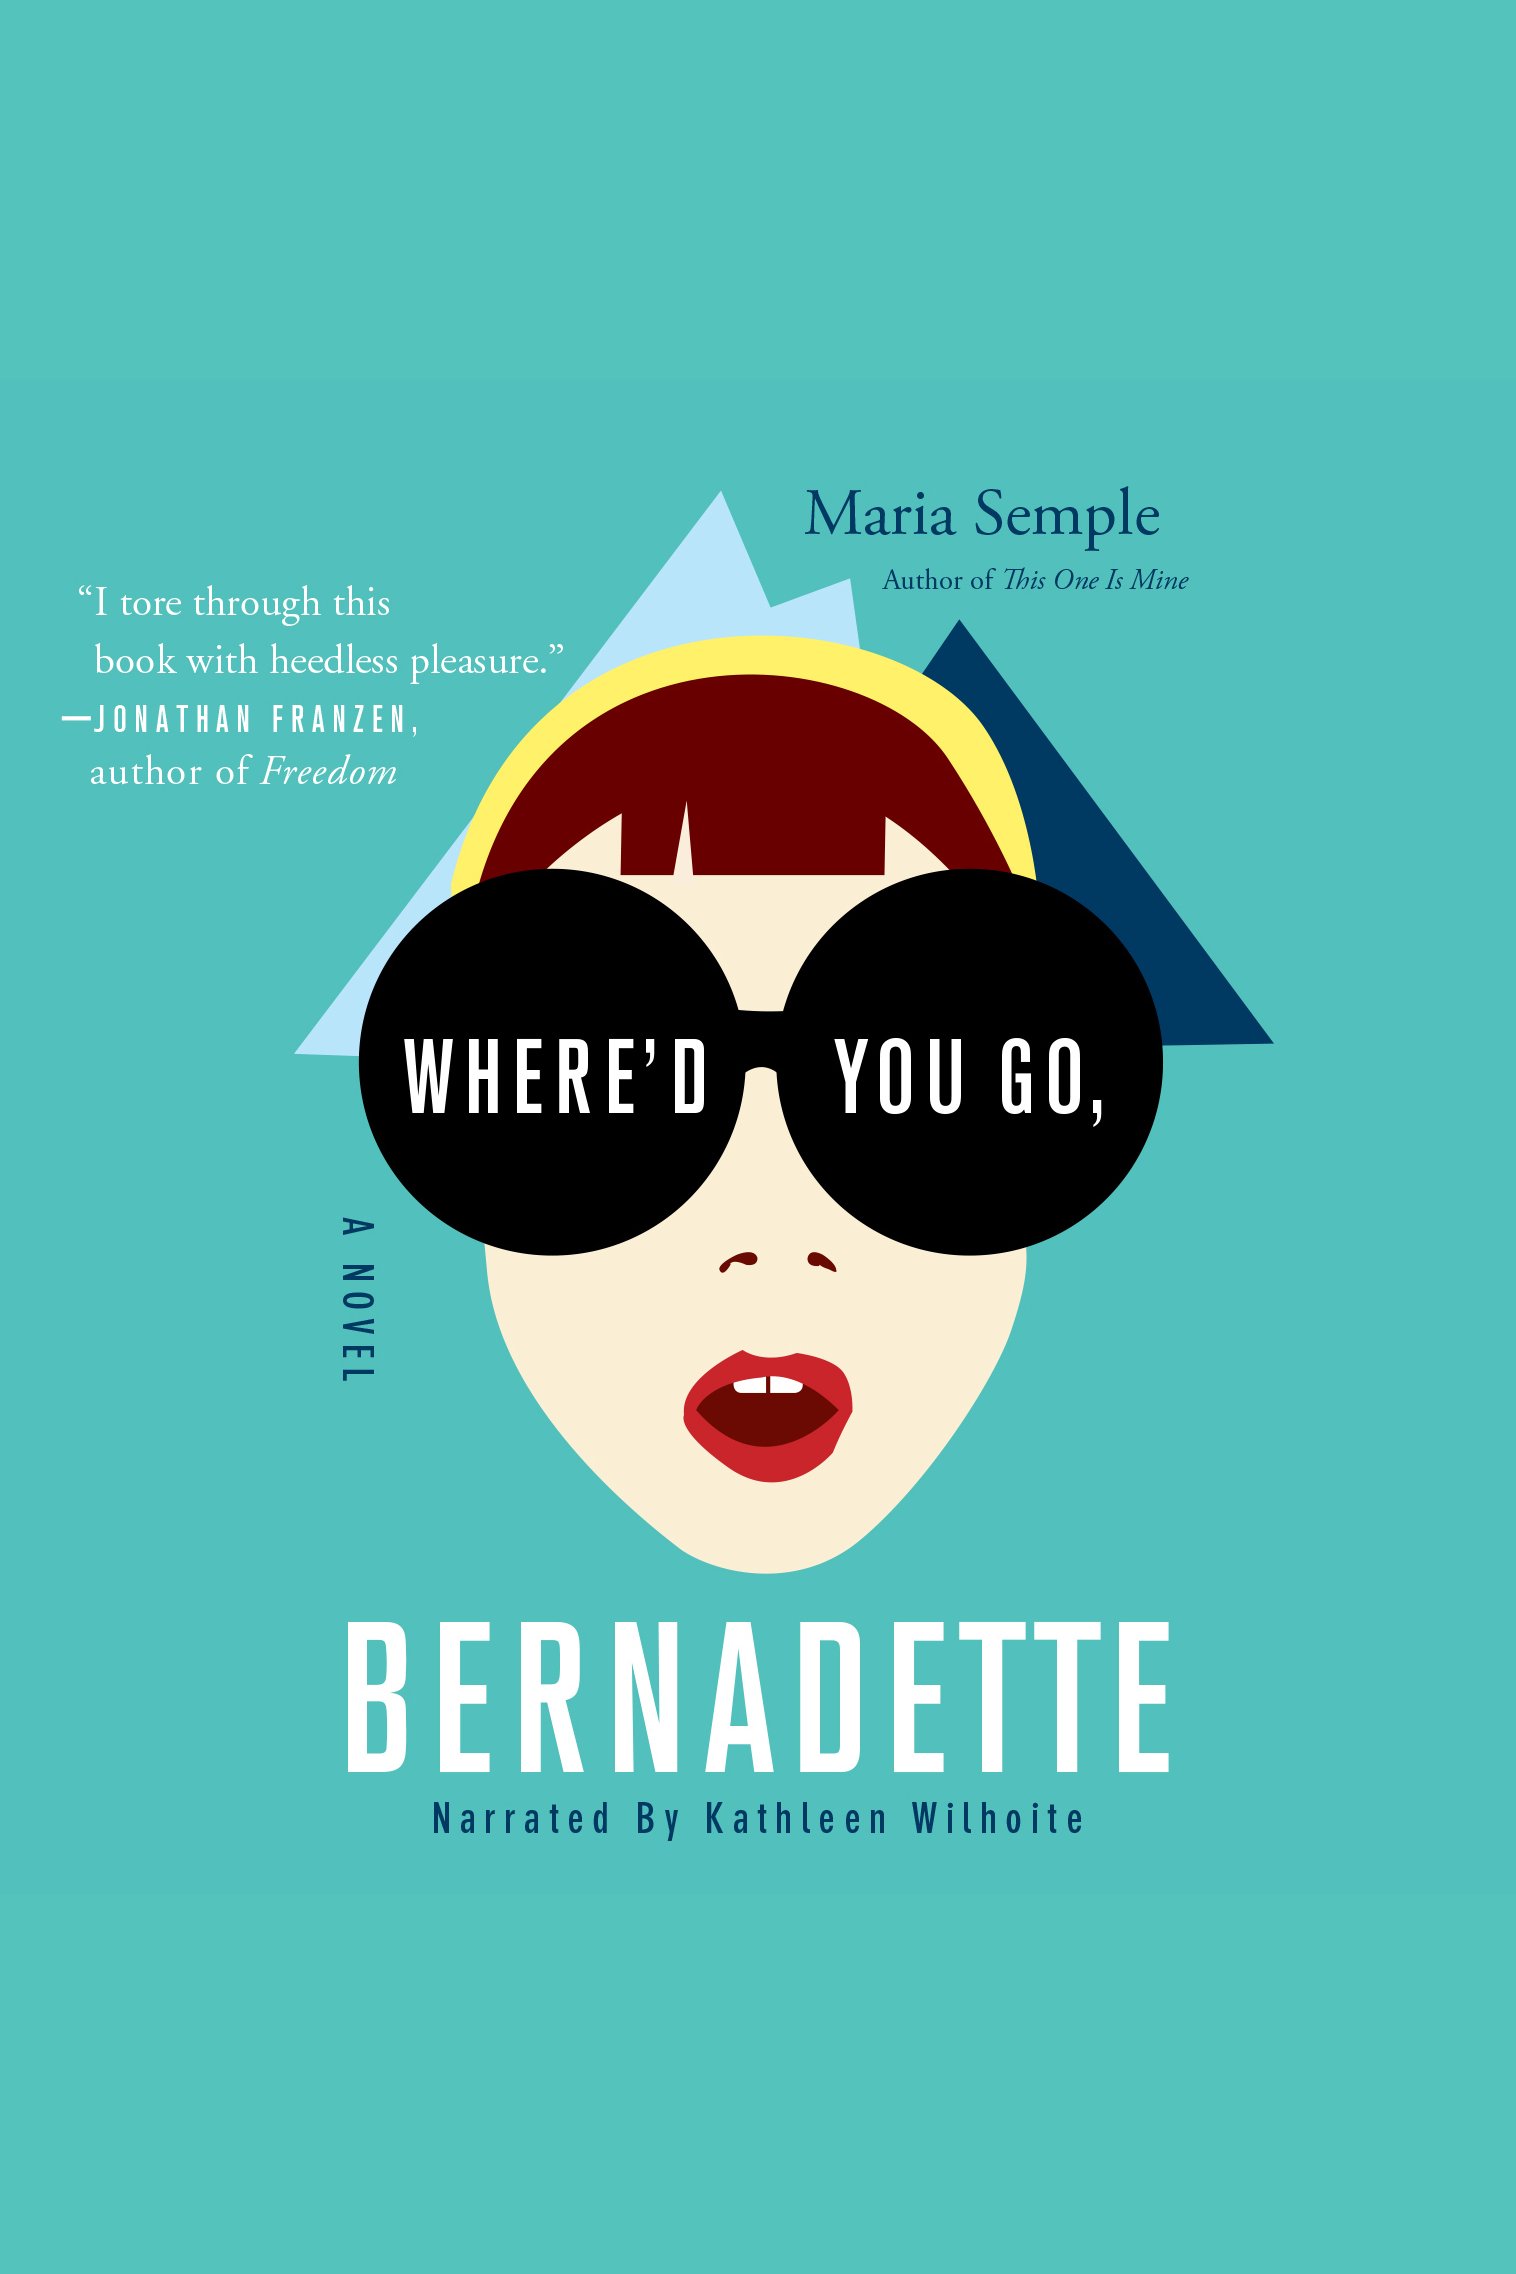 Where'd you go, Bernadette cover image